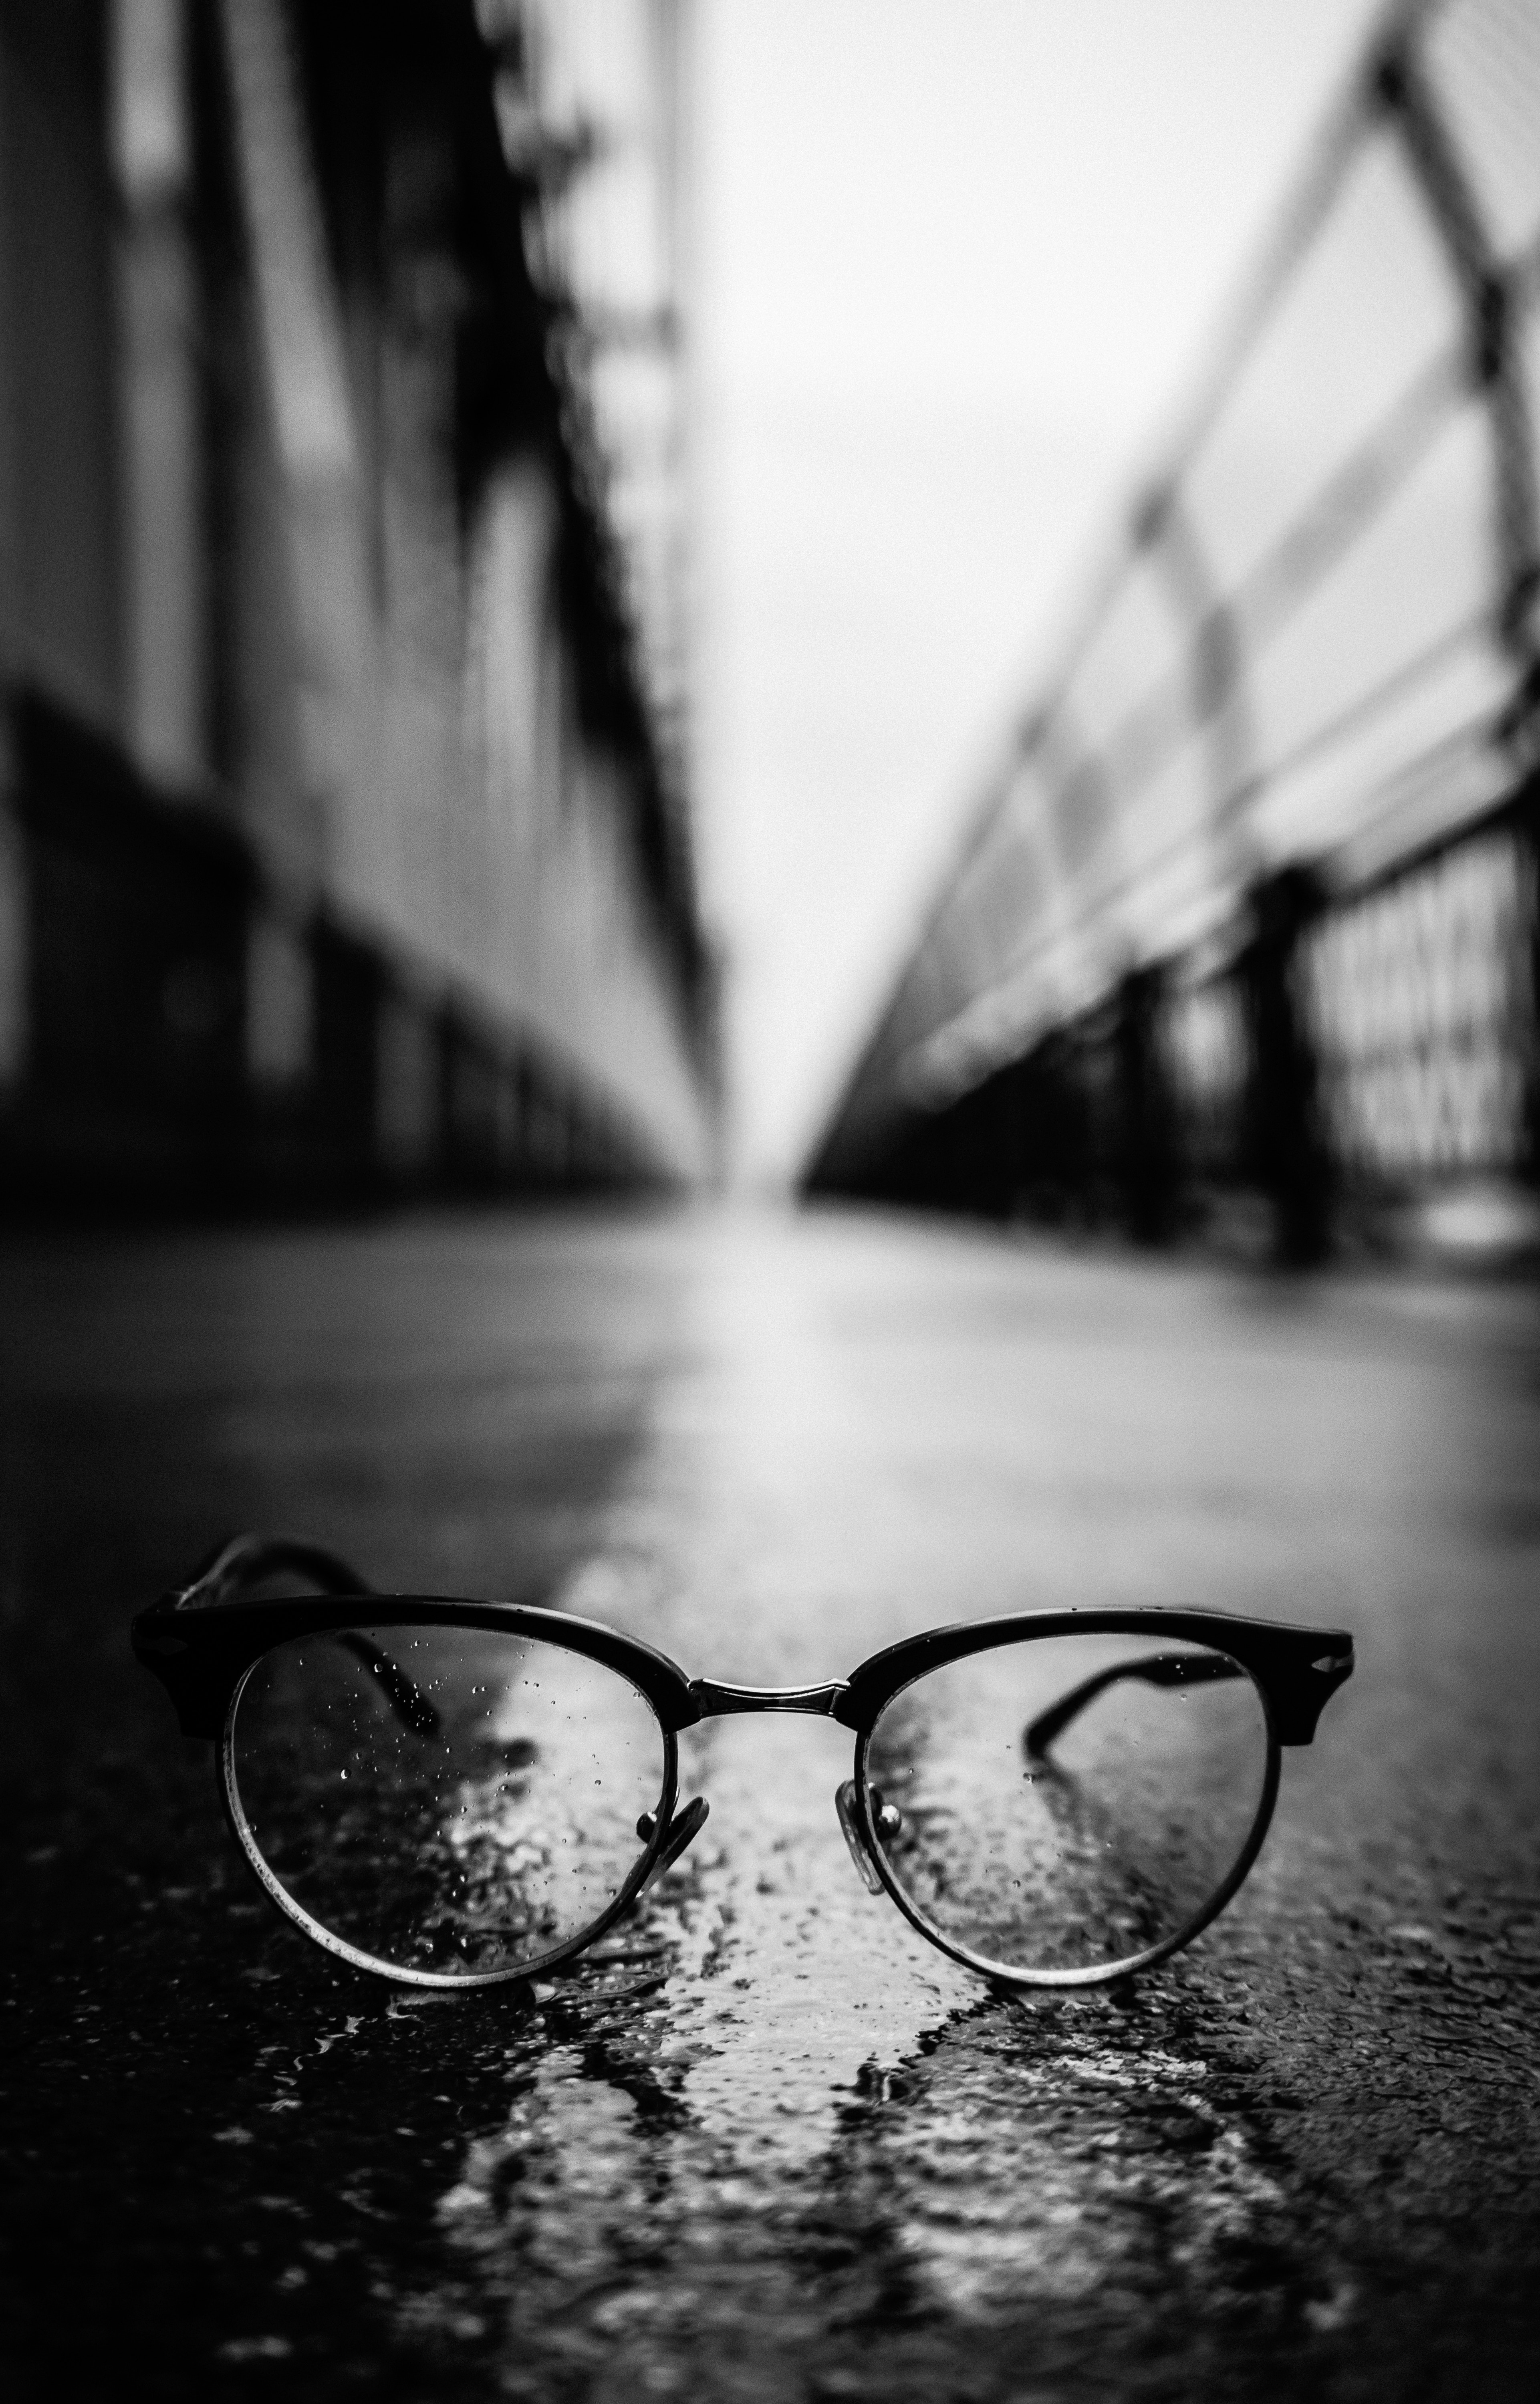 Free HD bw, close up, dark, chb, glasses, spectacles